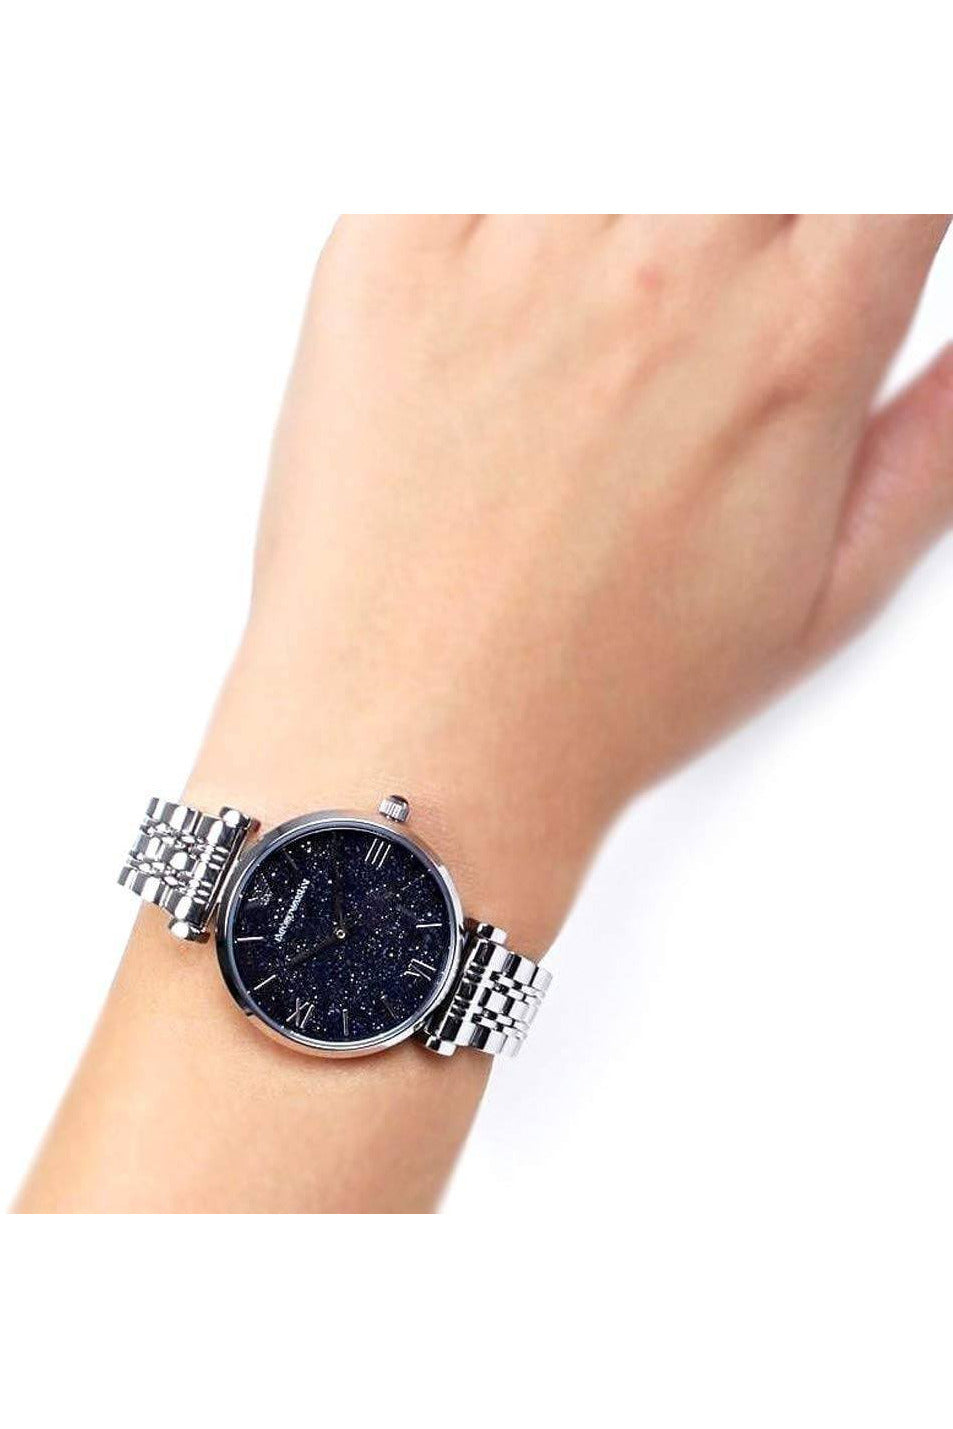 Buy Emporio Armani AR11091 Quartz Blue Dial Ladies Watch in Pakistan